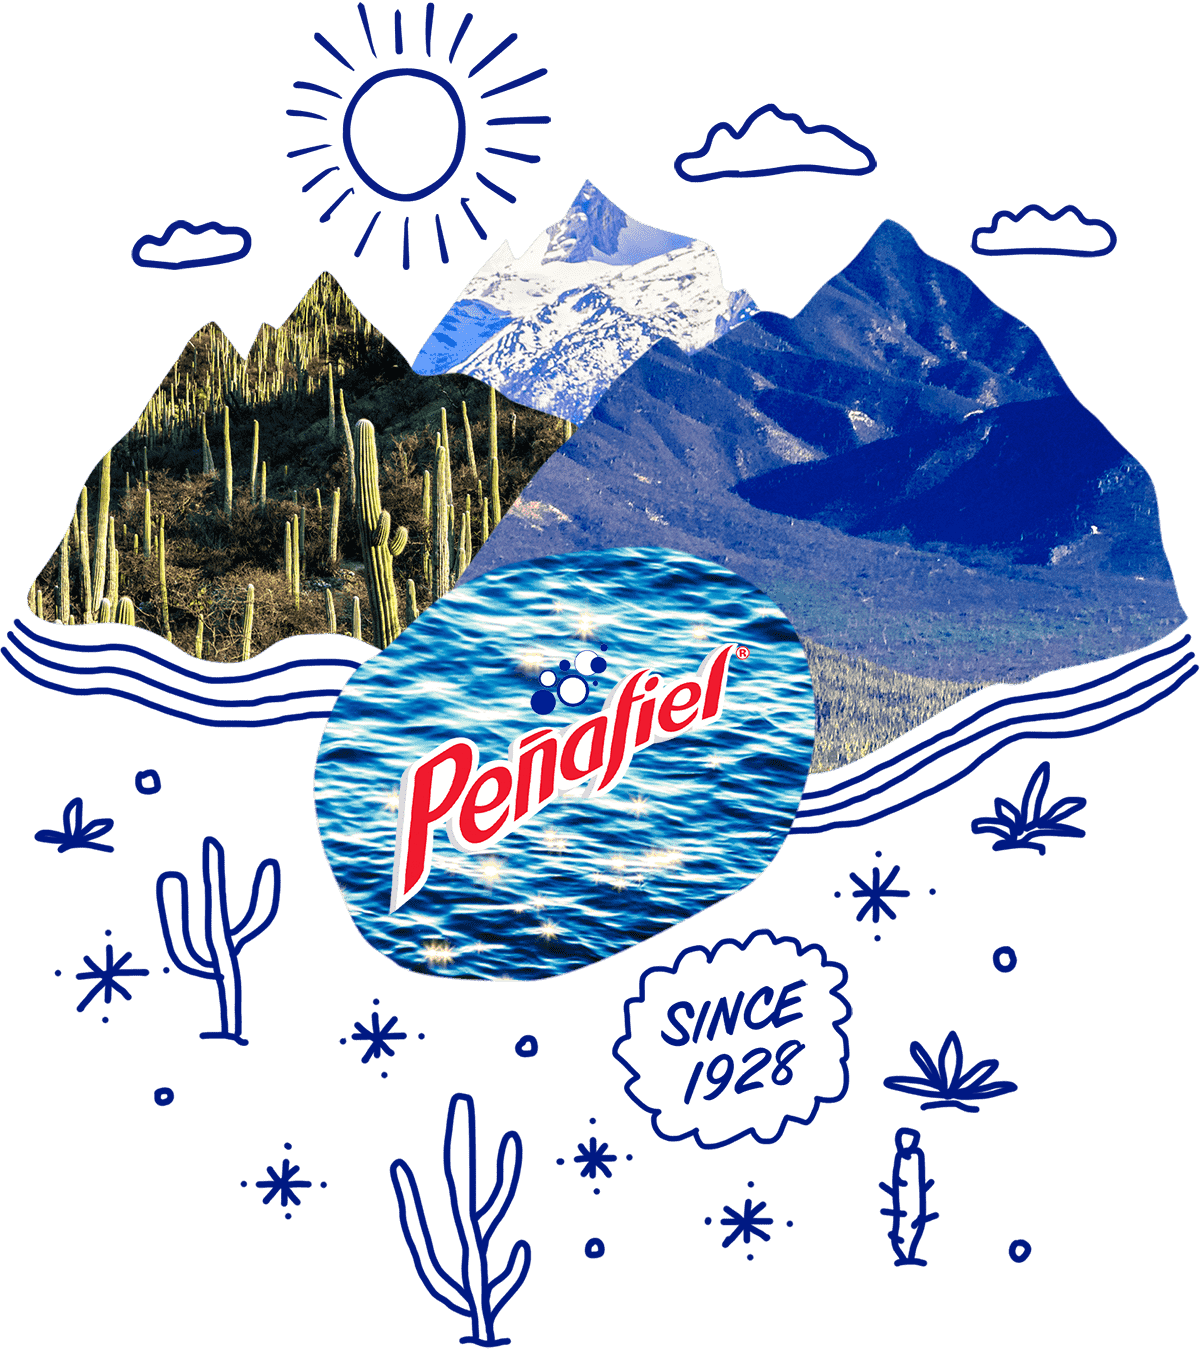 Peñafiel - Since 1928